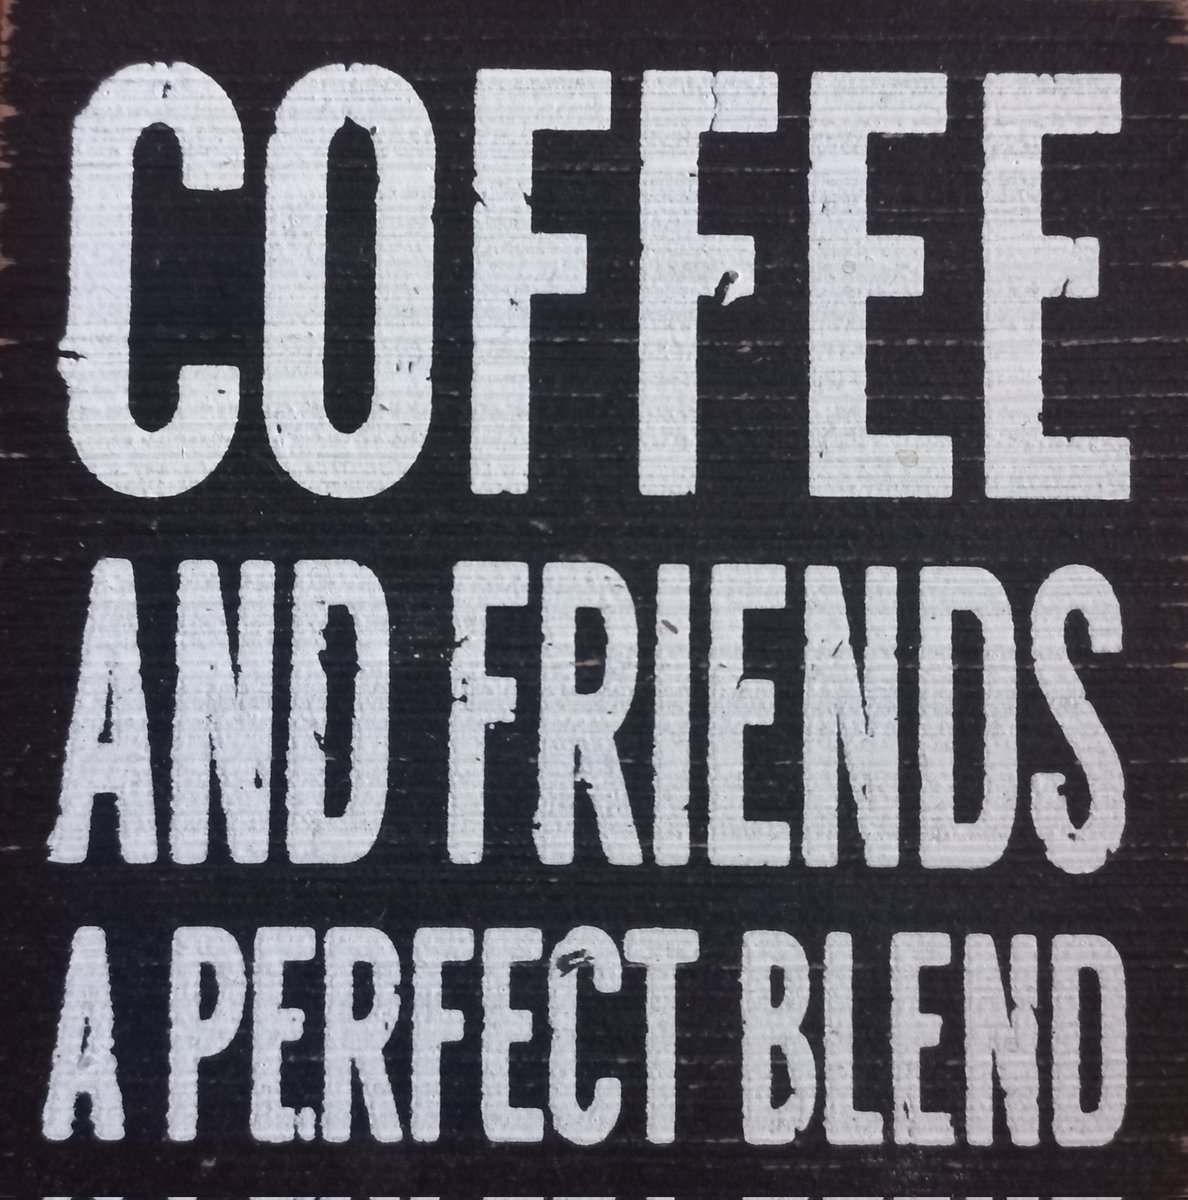 Great day for #CoffeeAndFriends ☕️🫂 #HappySunday #beinspired #coffeeinspiration